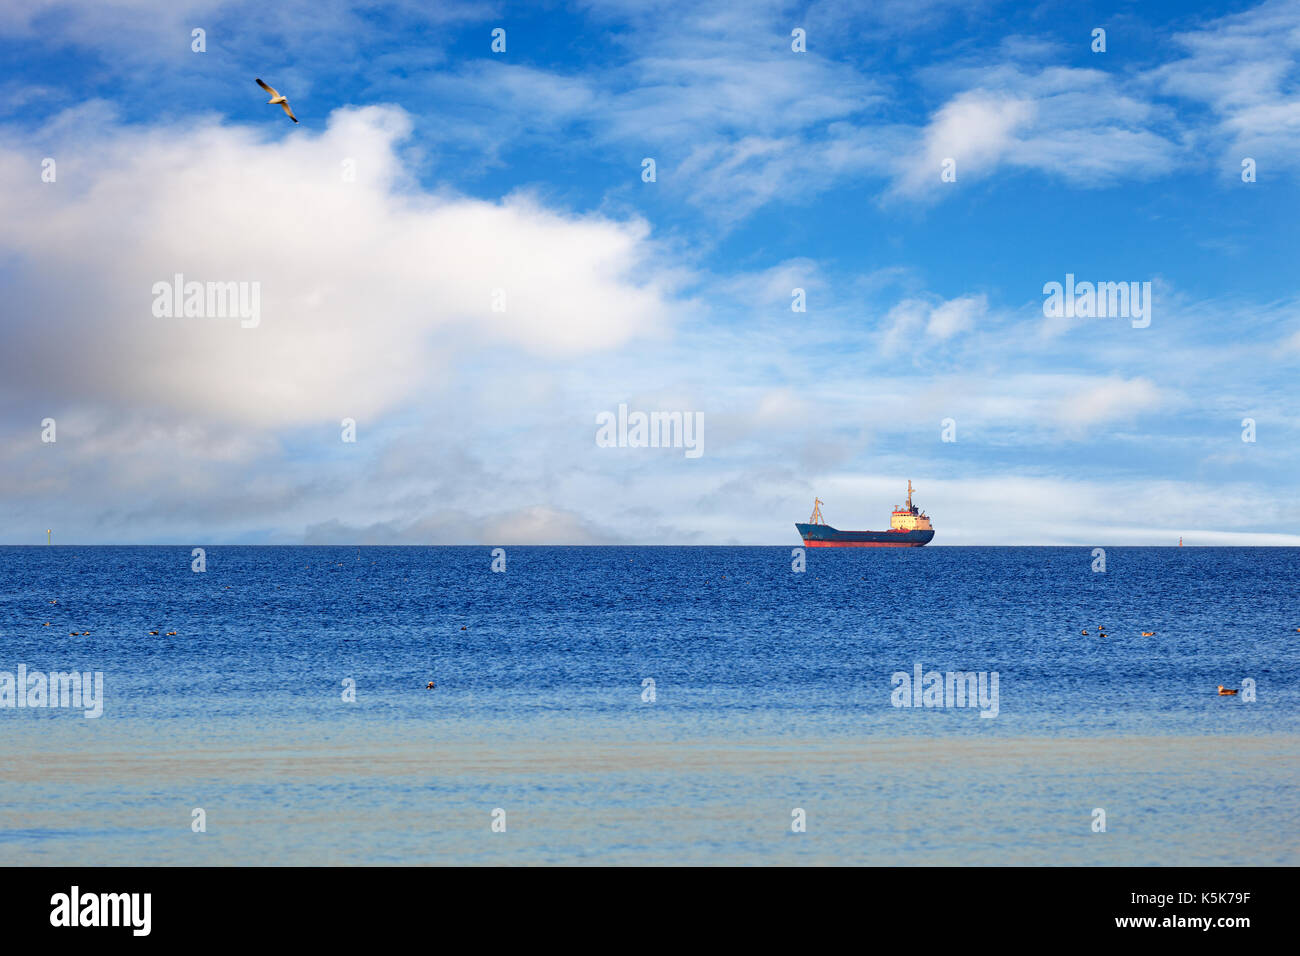 A cargo ship floating on a calm sea. Stock Photo